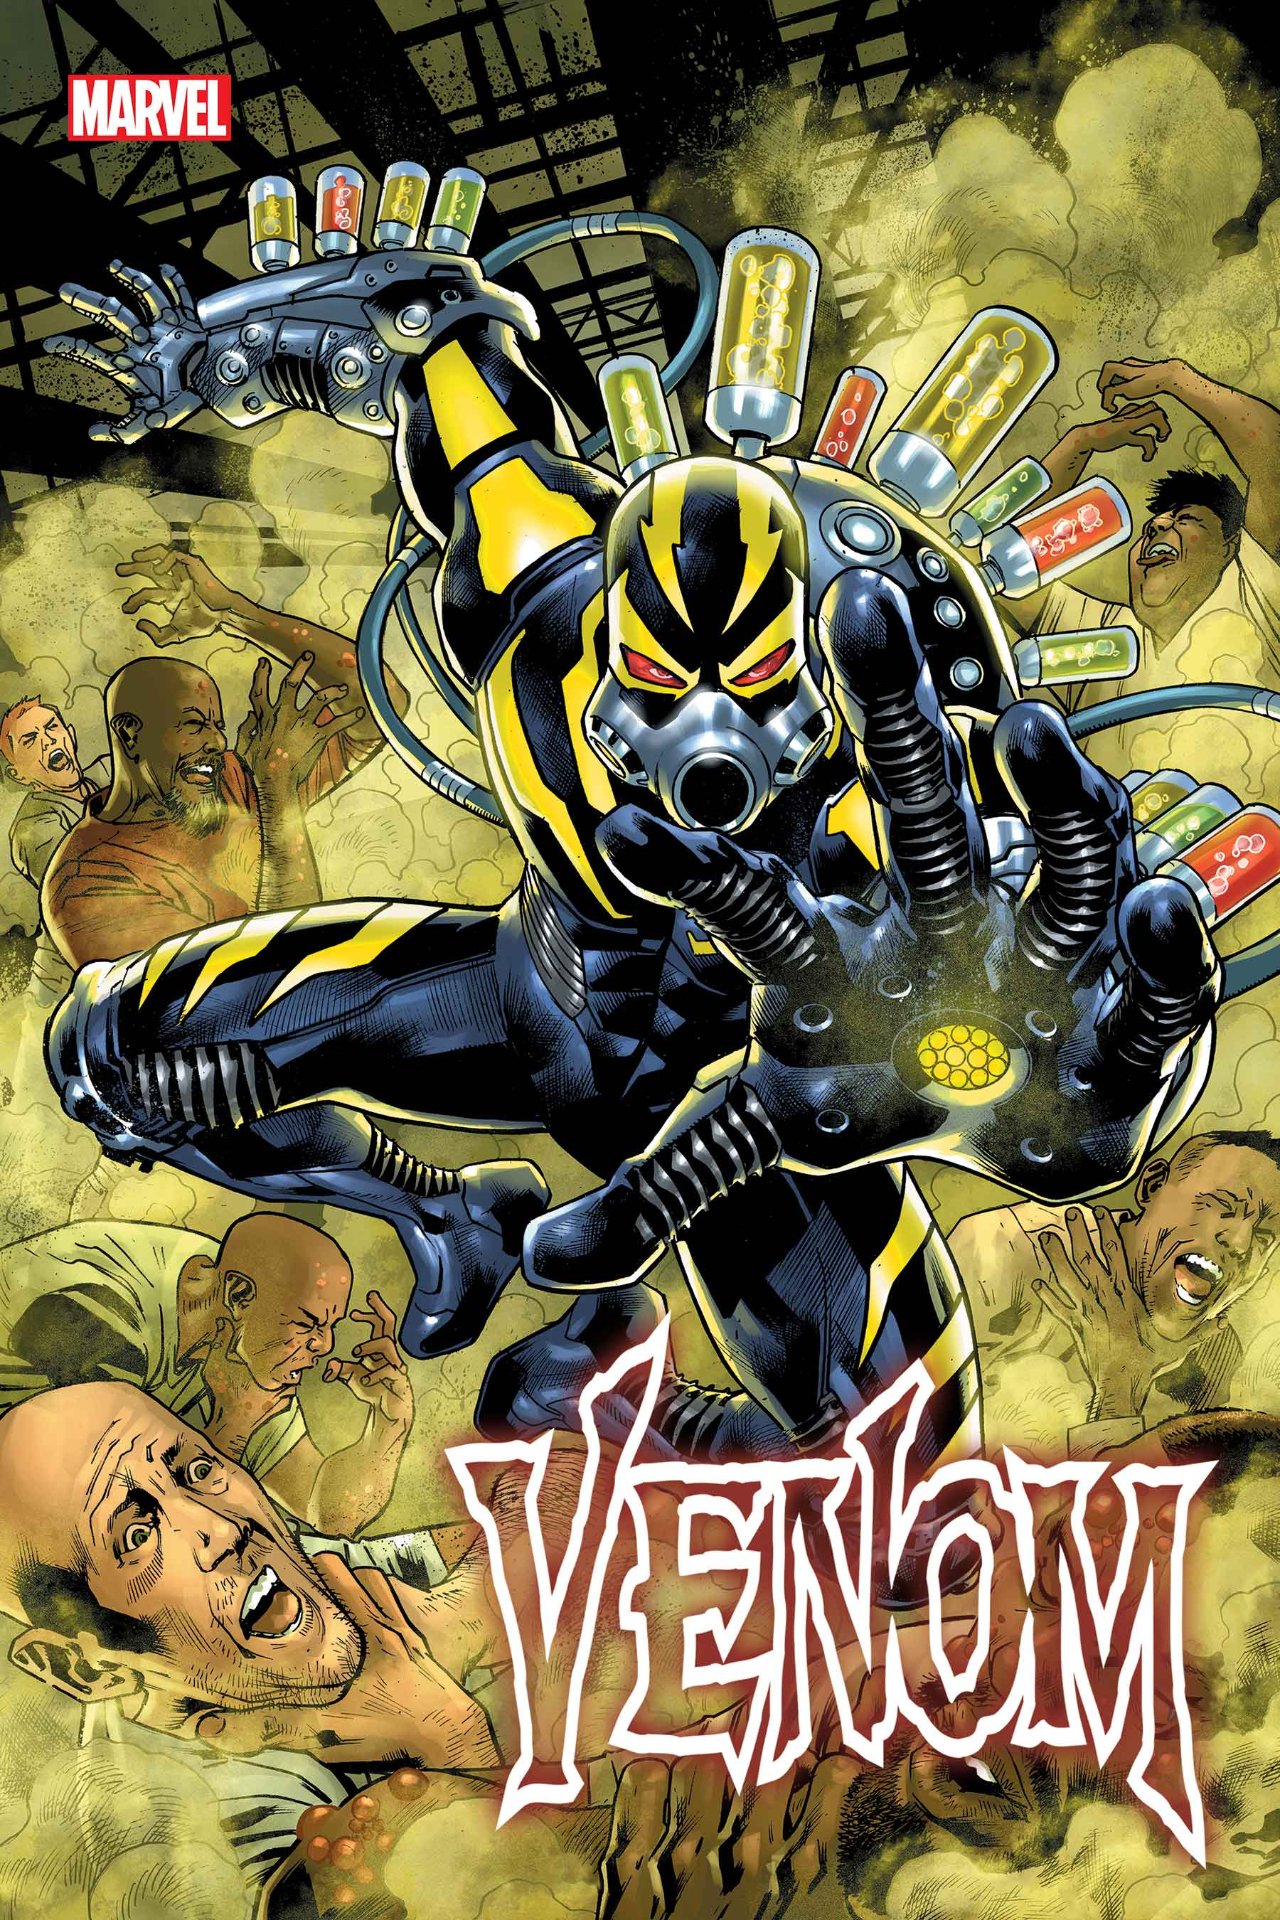 Sleeper Agent on the cover of Venom #11